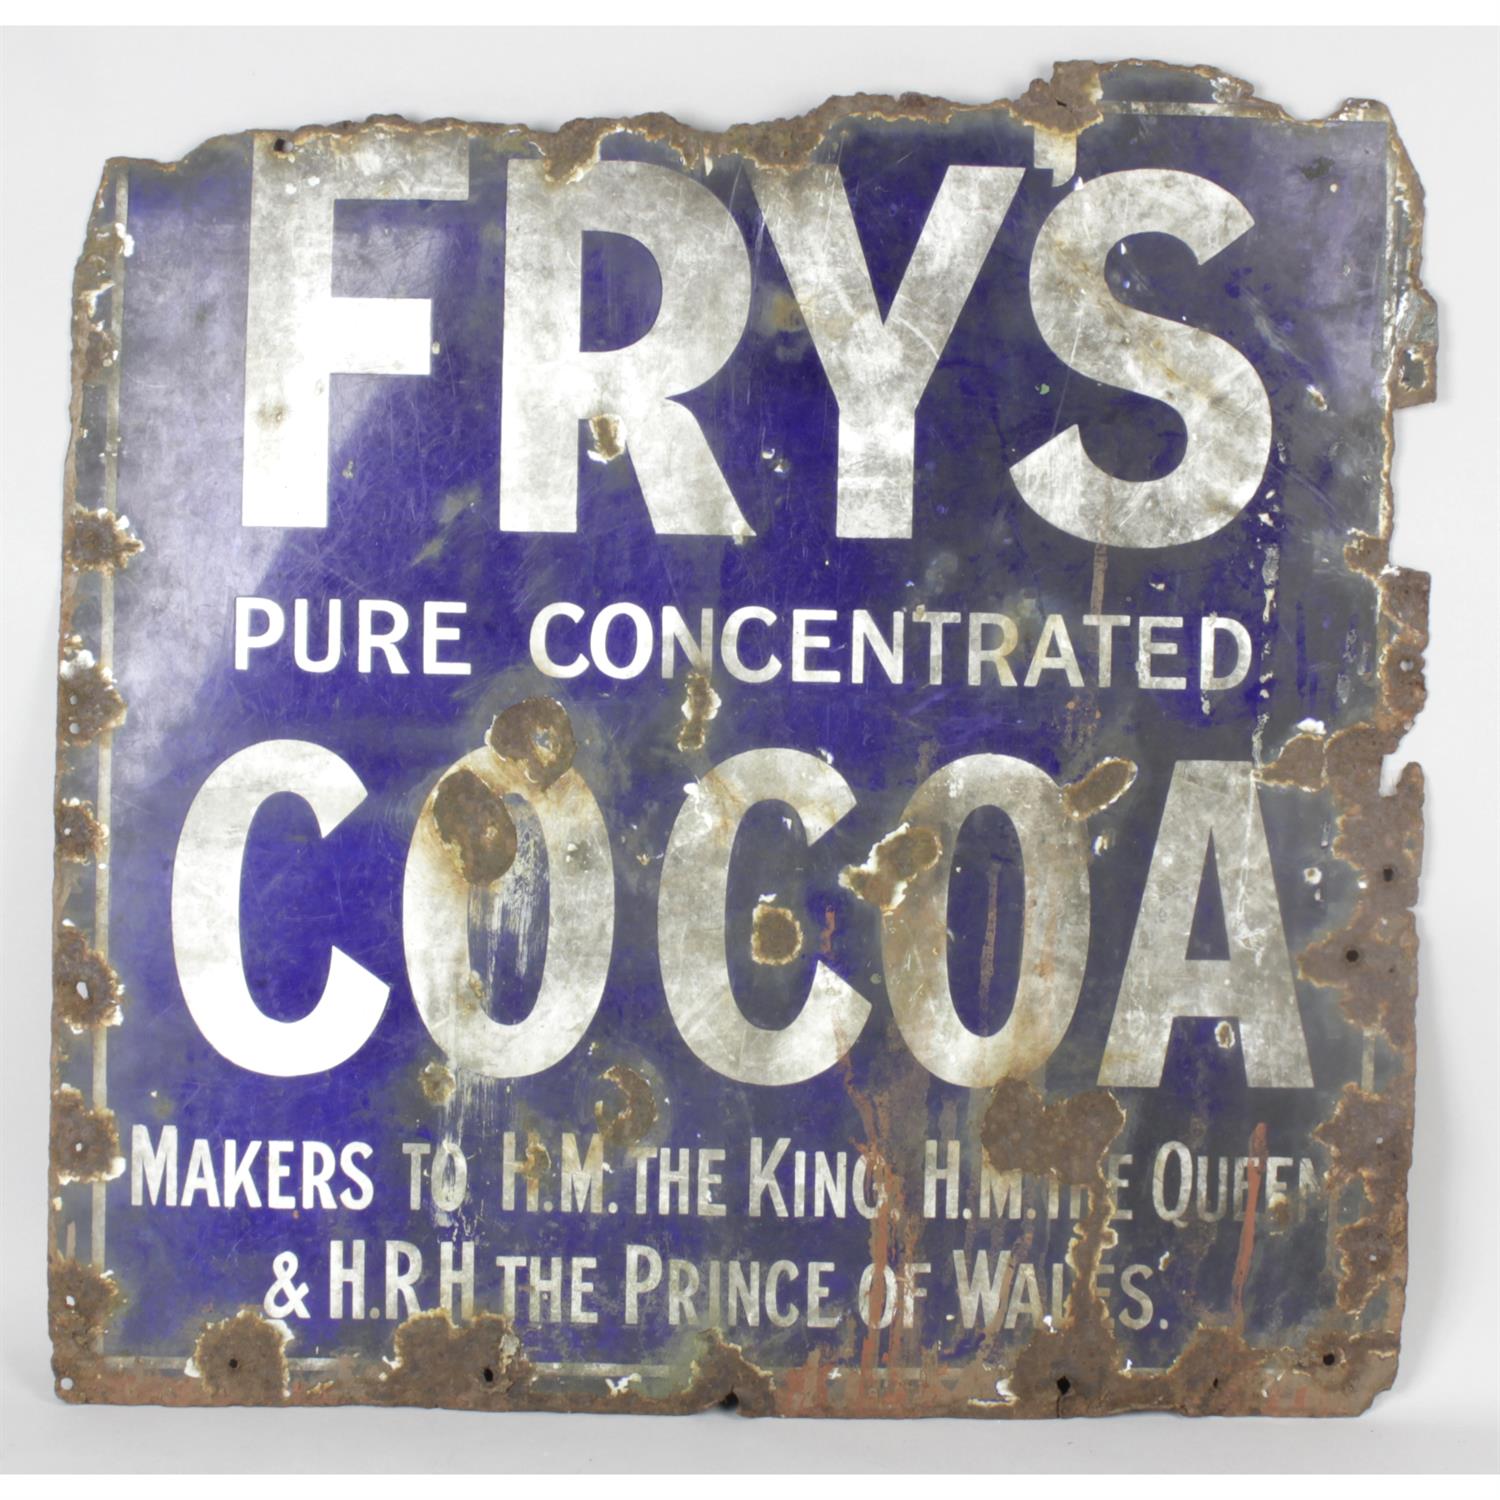 Fry's Cocoa enamel sign